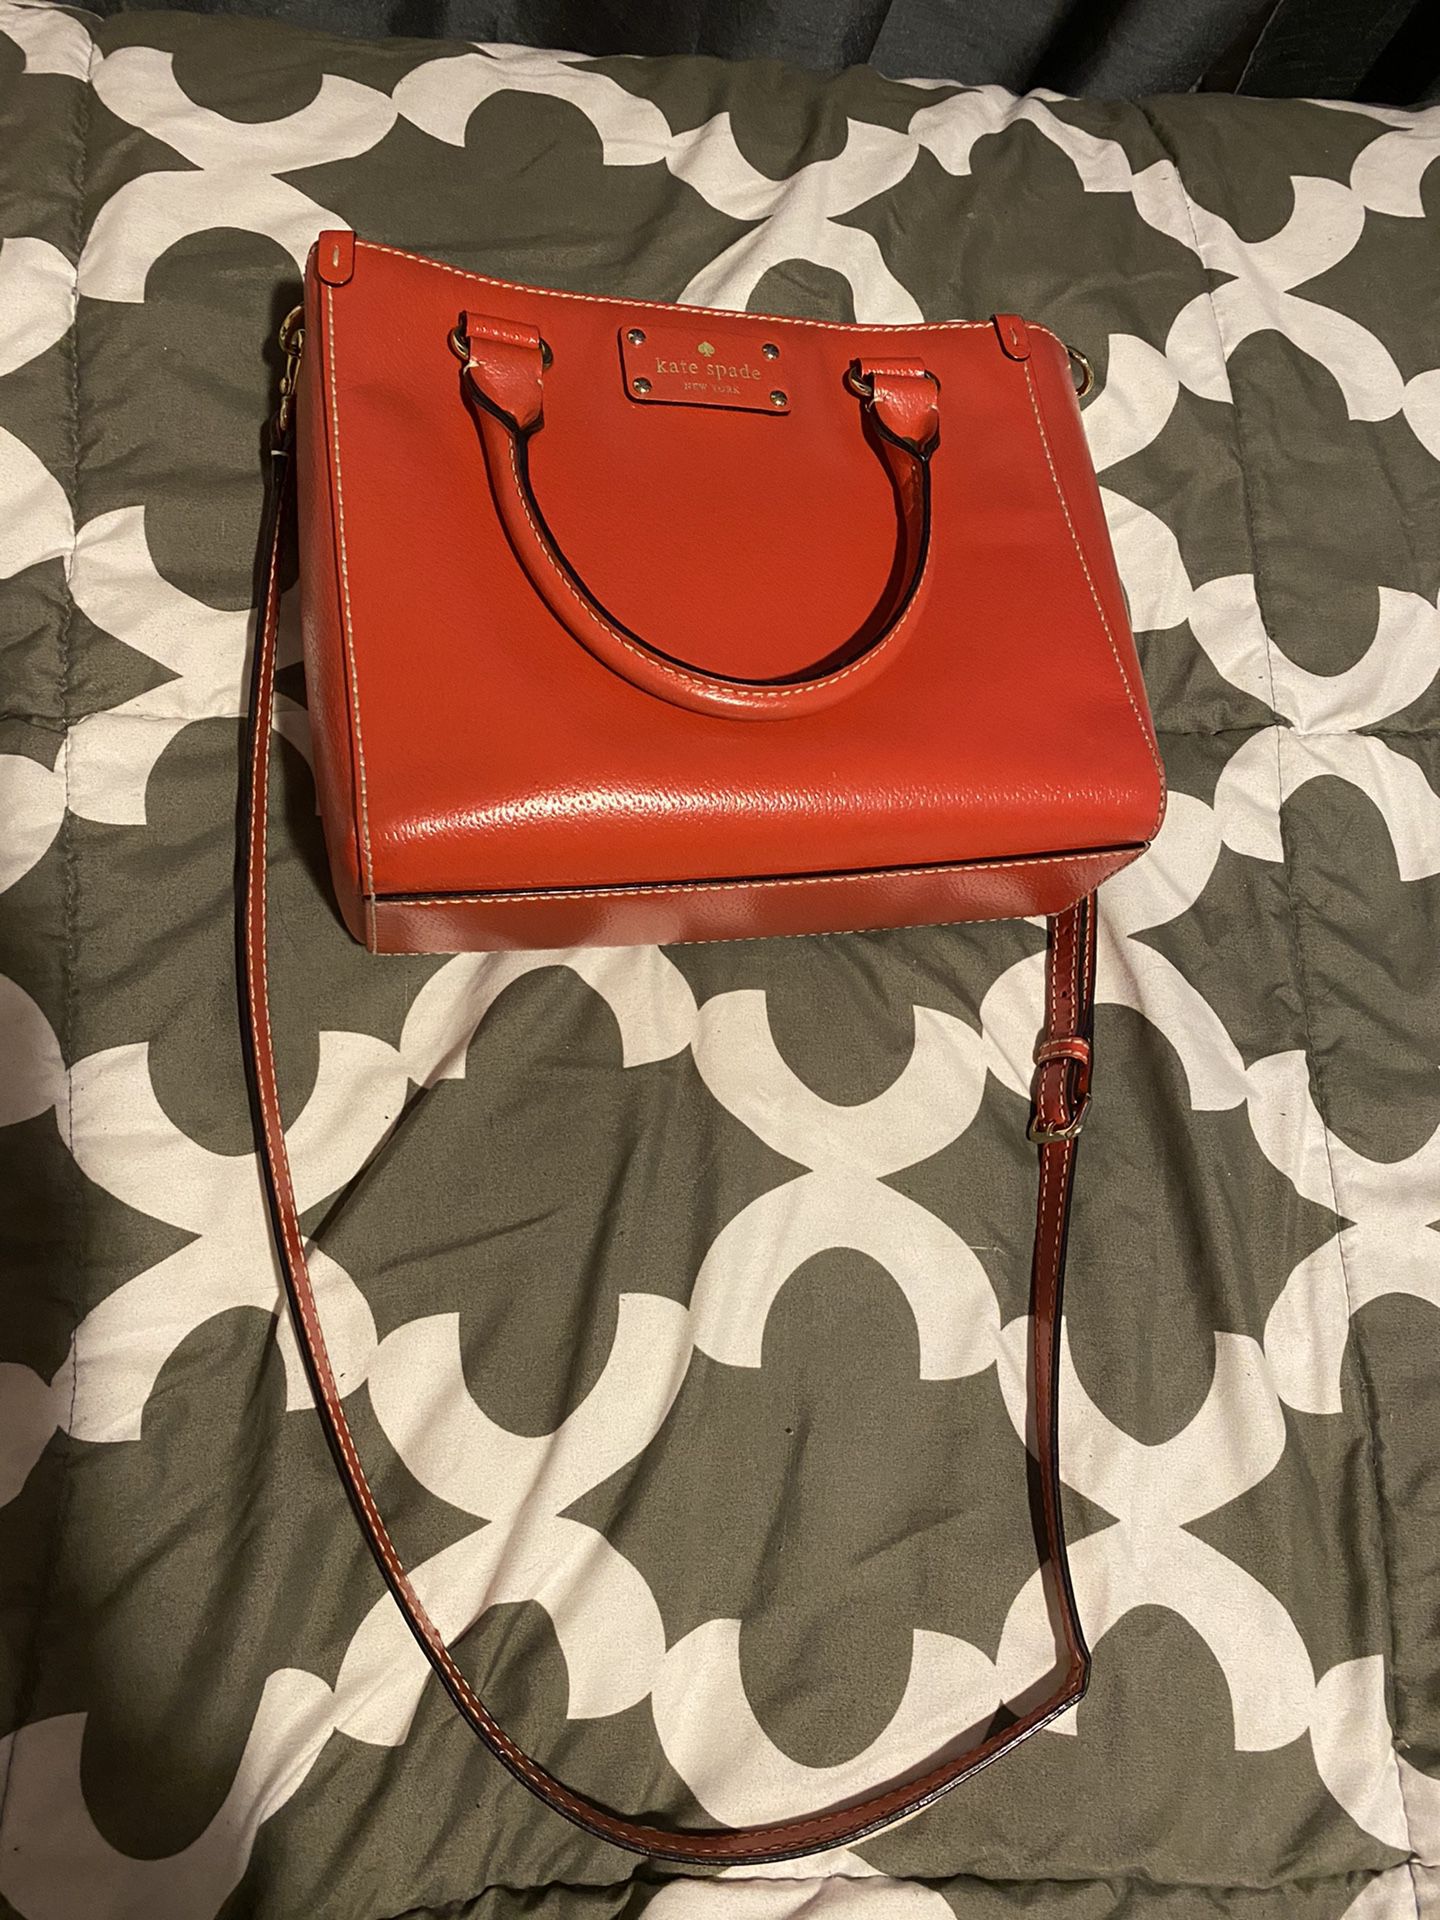 Red Kate spade purse